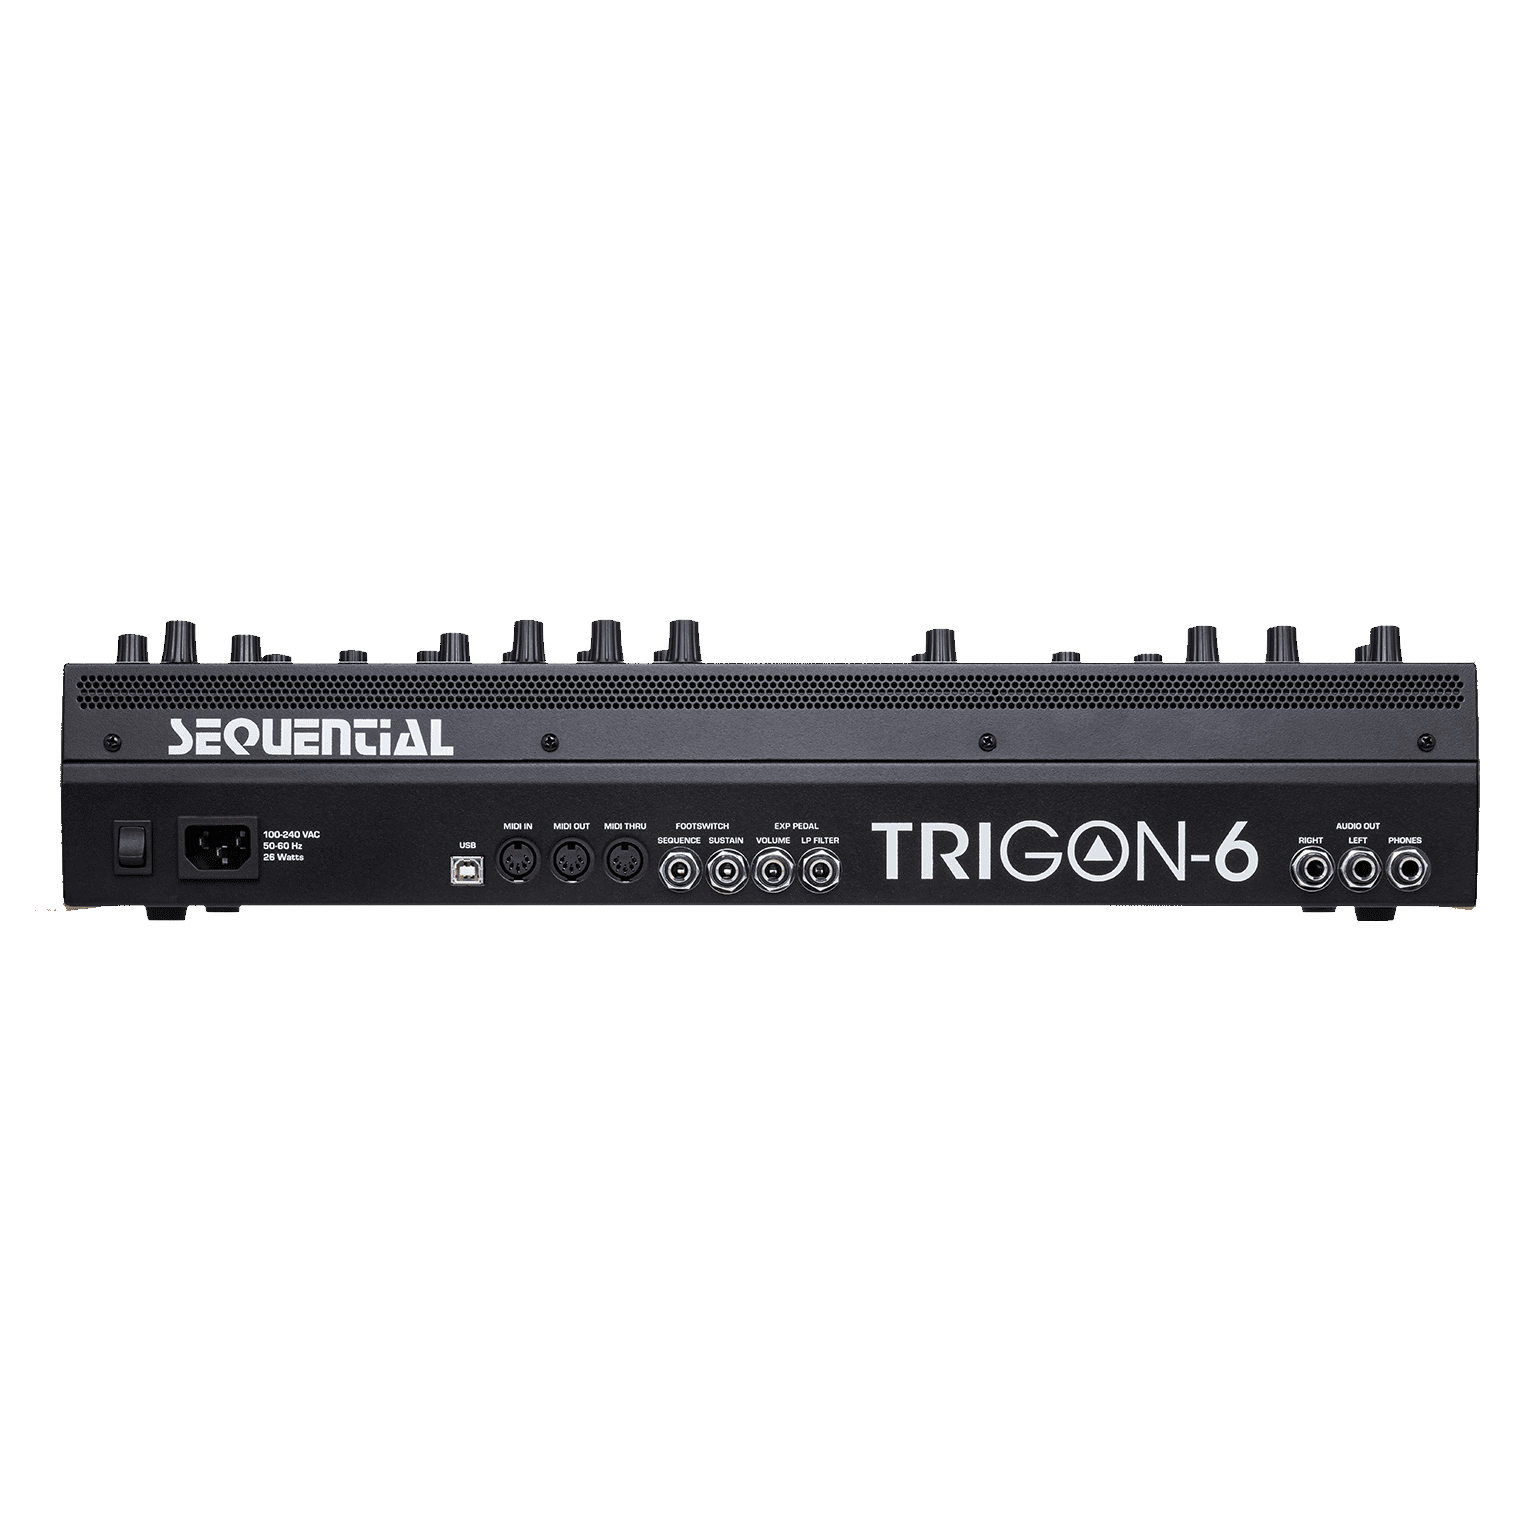 Sequential Trigon-6 Desktop по цене 345 000 ₽